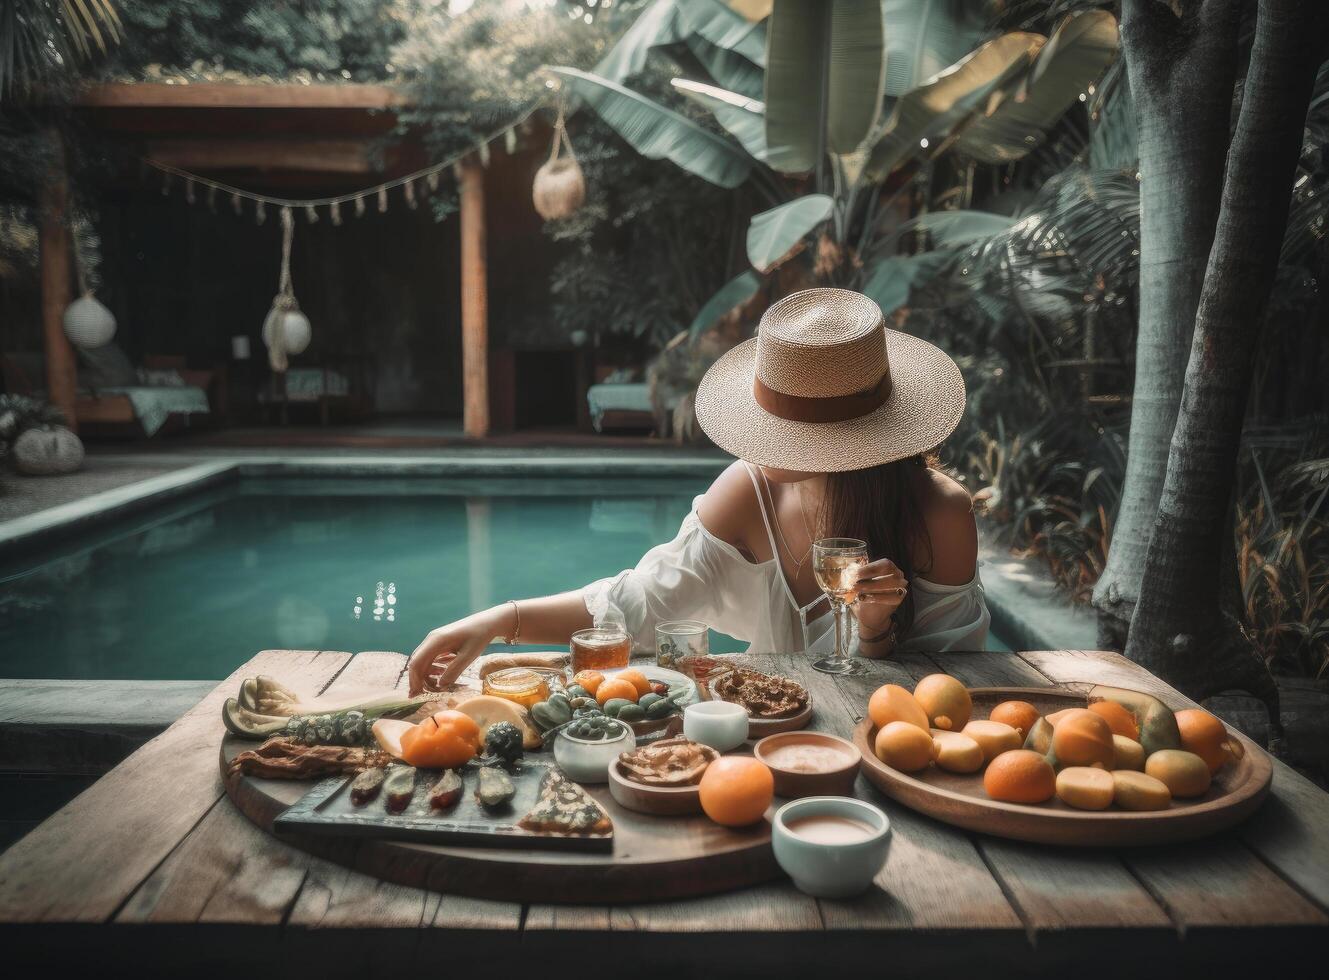 Woman eating near pool. Illustration photo